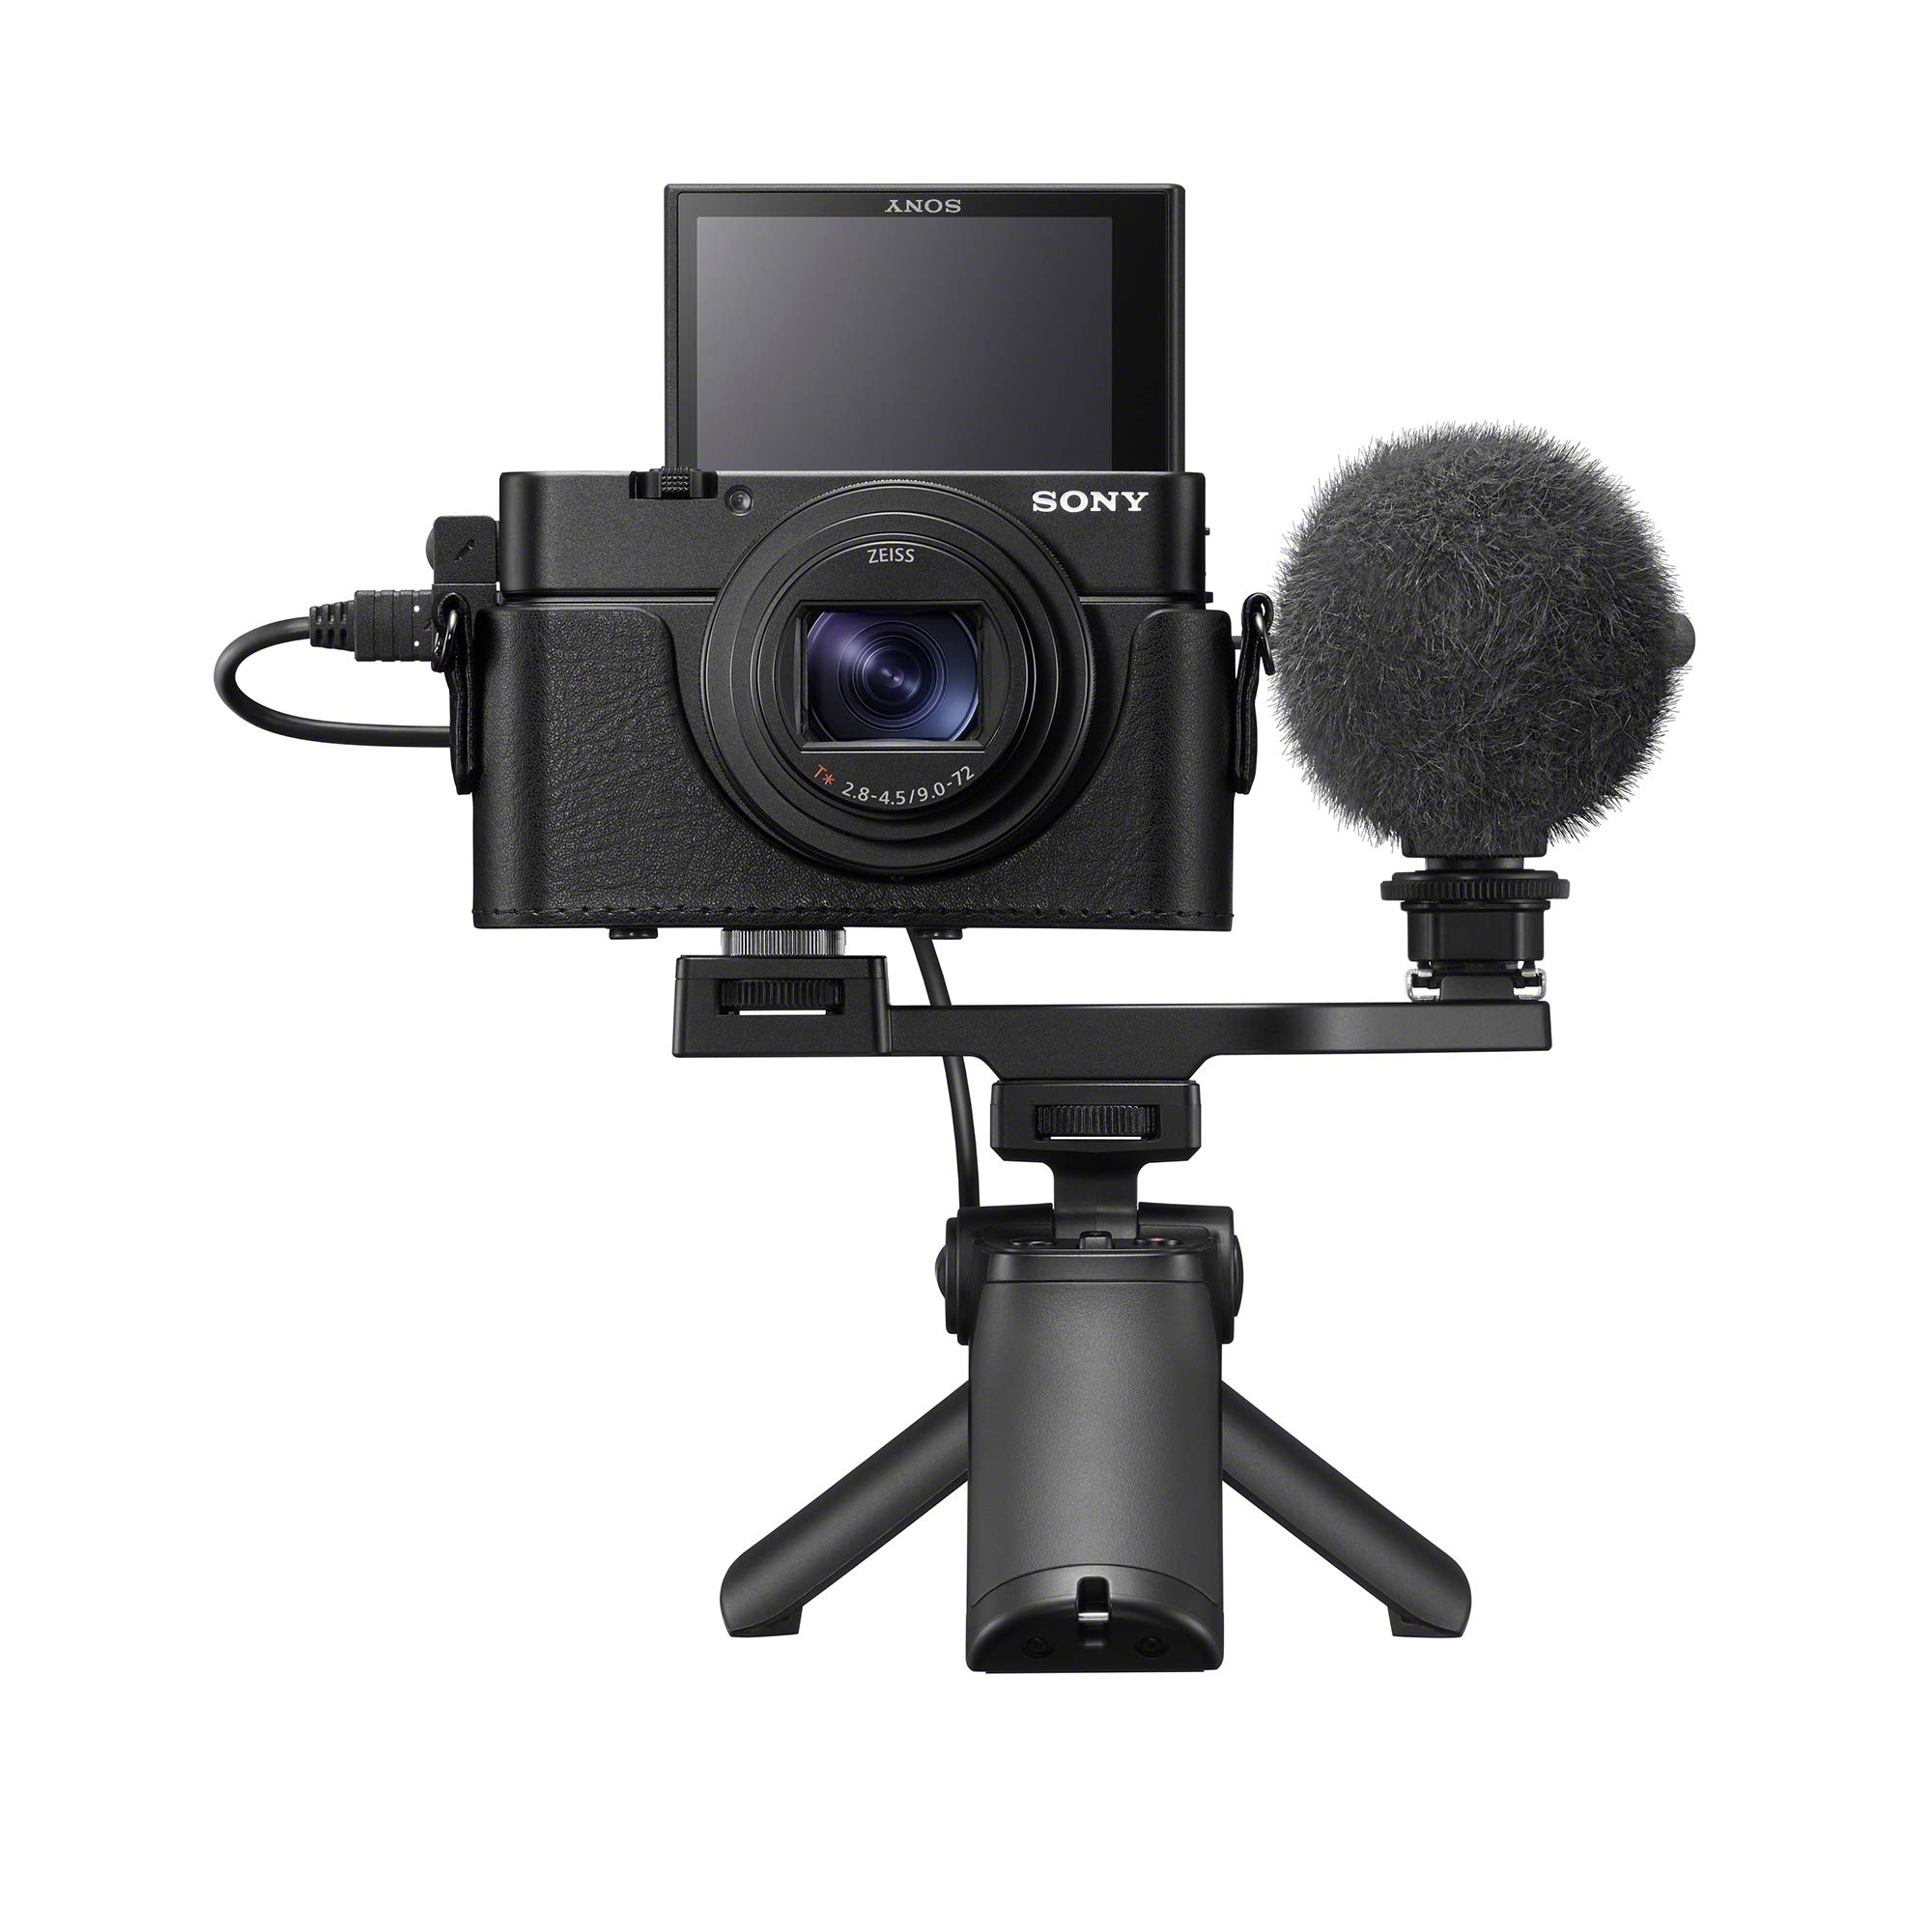 Sony Premium Jacket Case (LCJRXK/B) for RX100 Series Digital Still Cameras, Black, Small